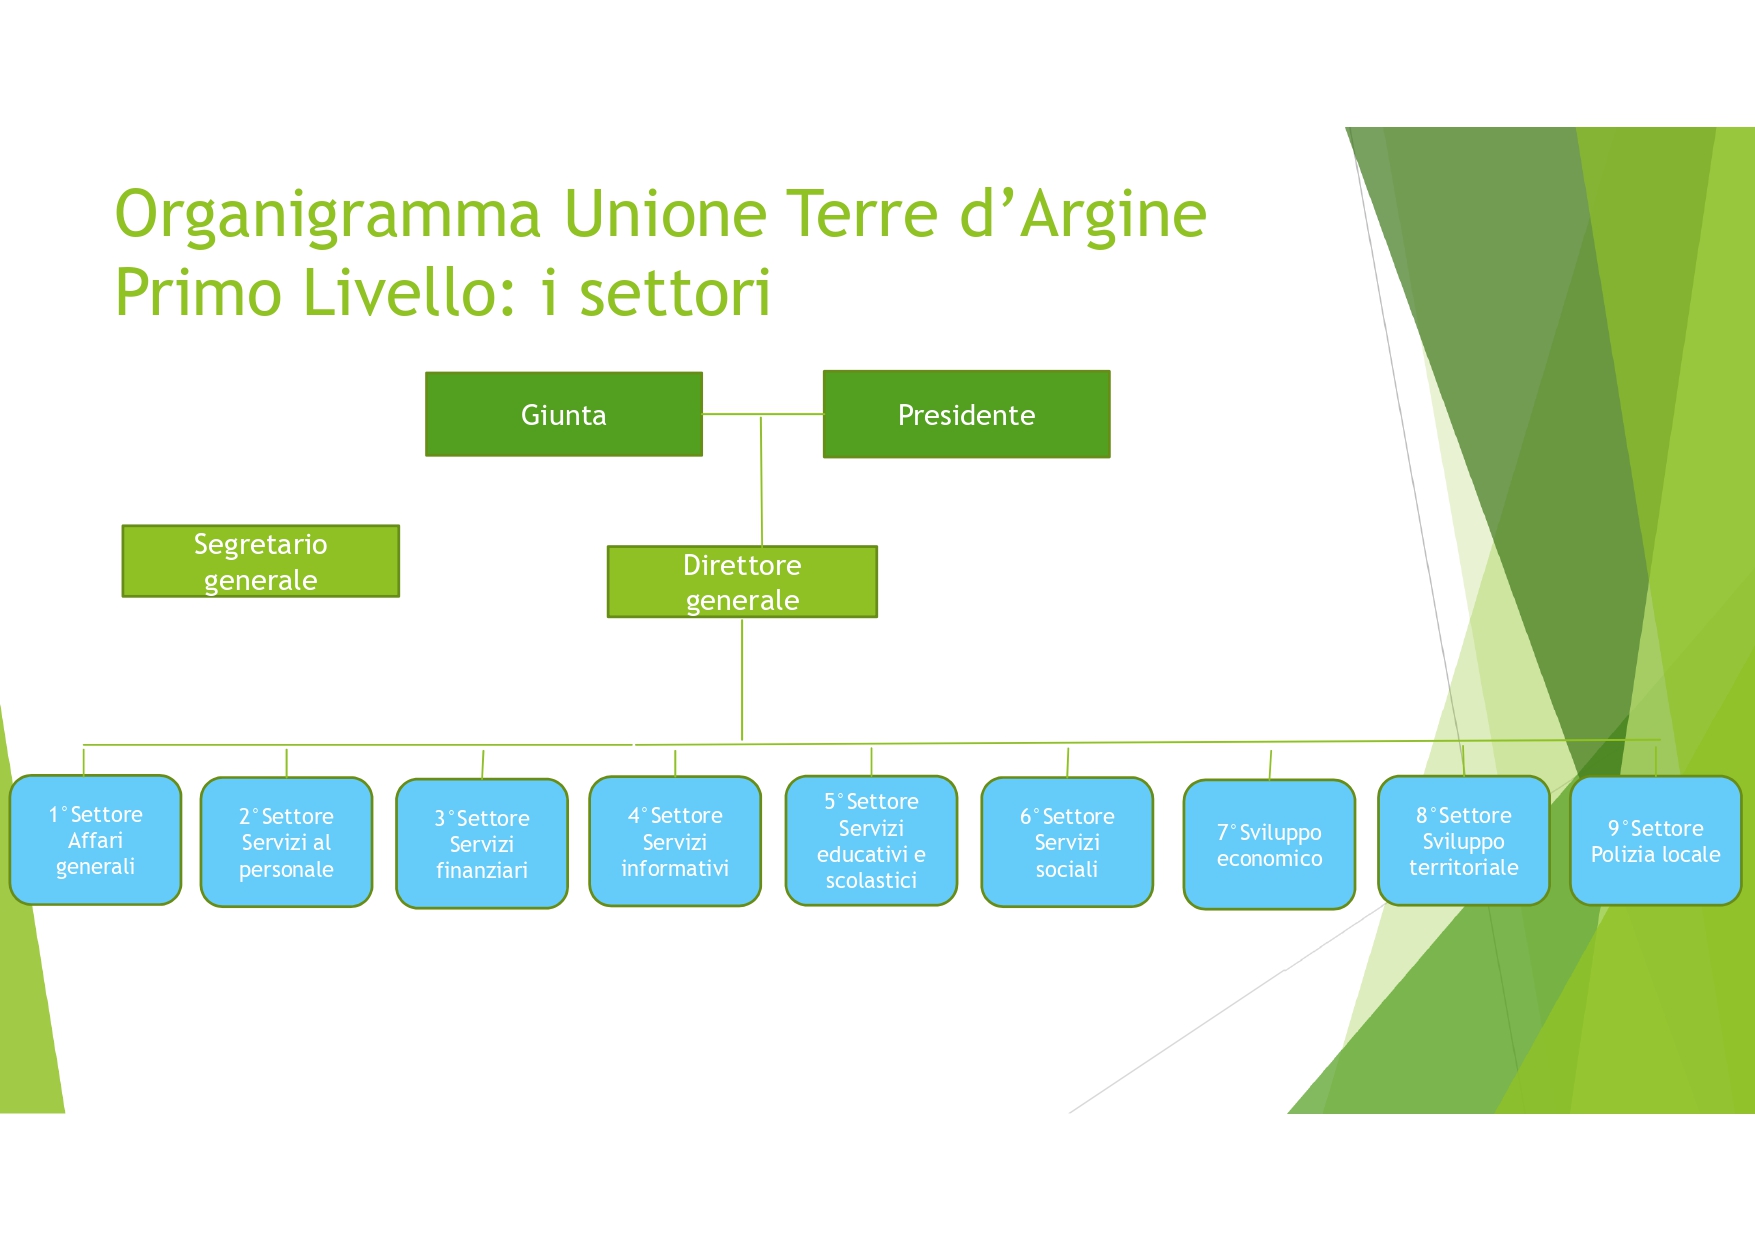 2021-11-24_Organizzazione-Unione-Terre-dArgine.jpg - 329,02 kB